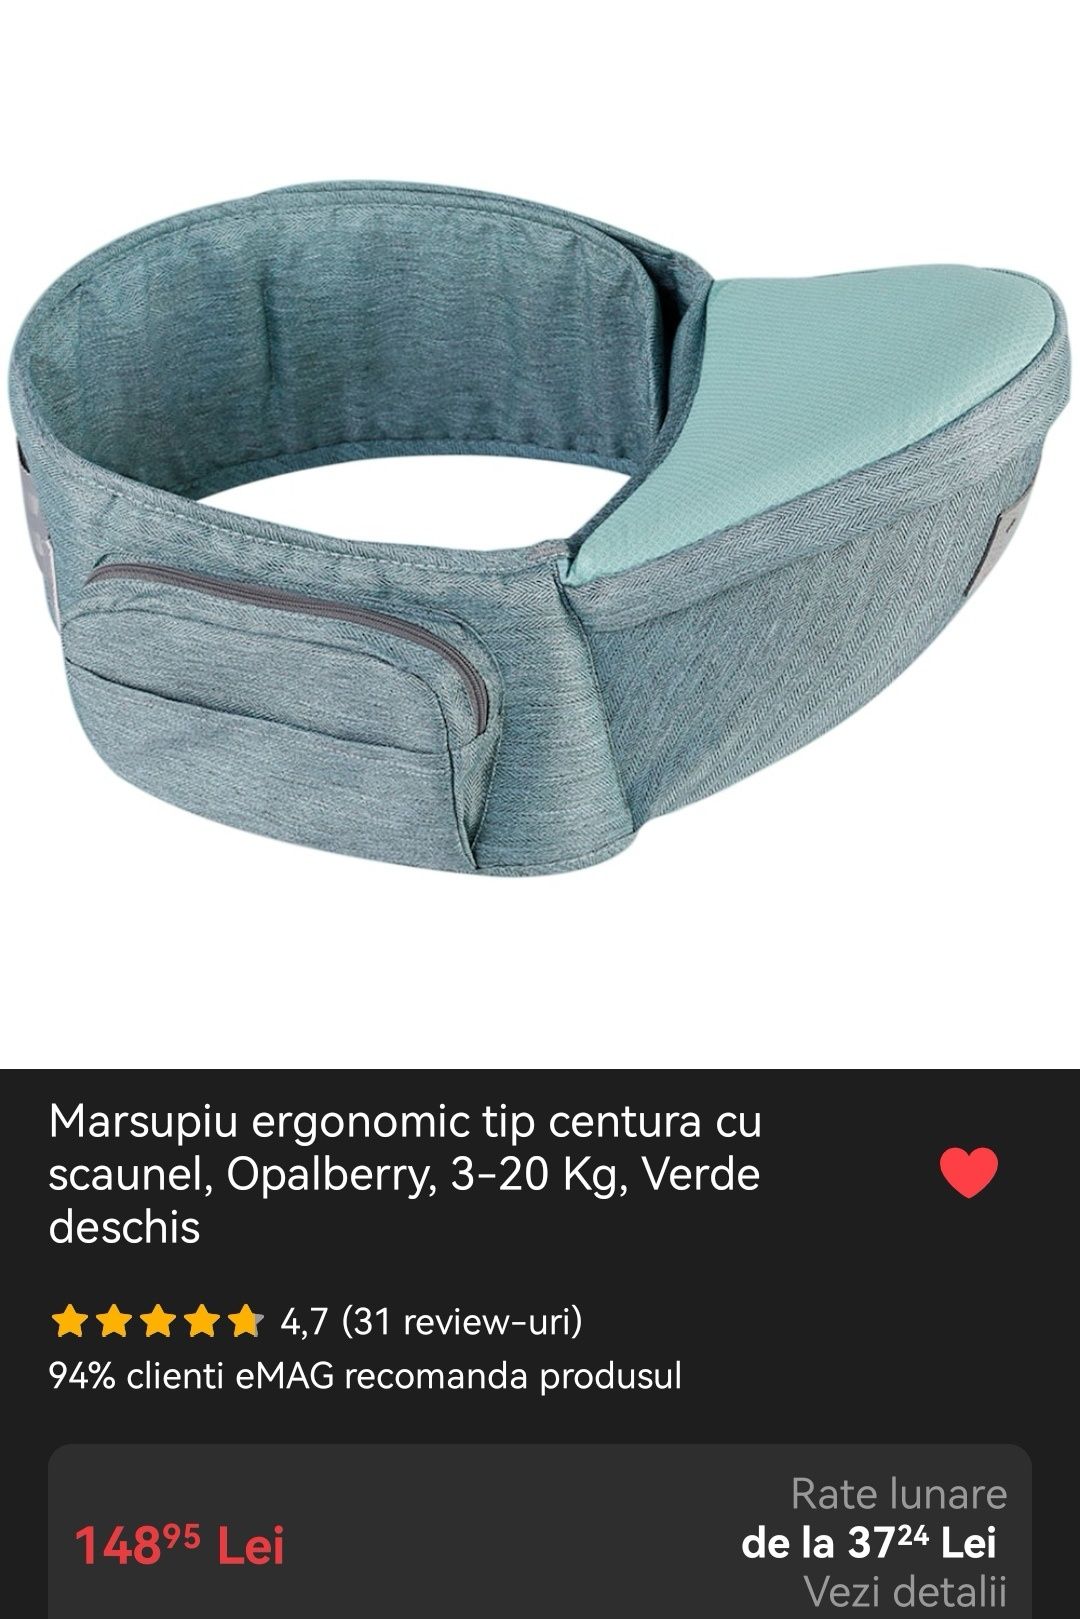 Marsupiu ergonomic tip centura cu scaunel, Opalberry, 3-20 Kg, Verde d